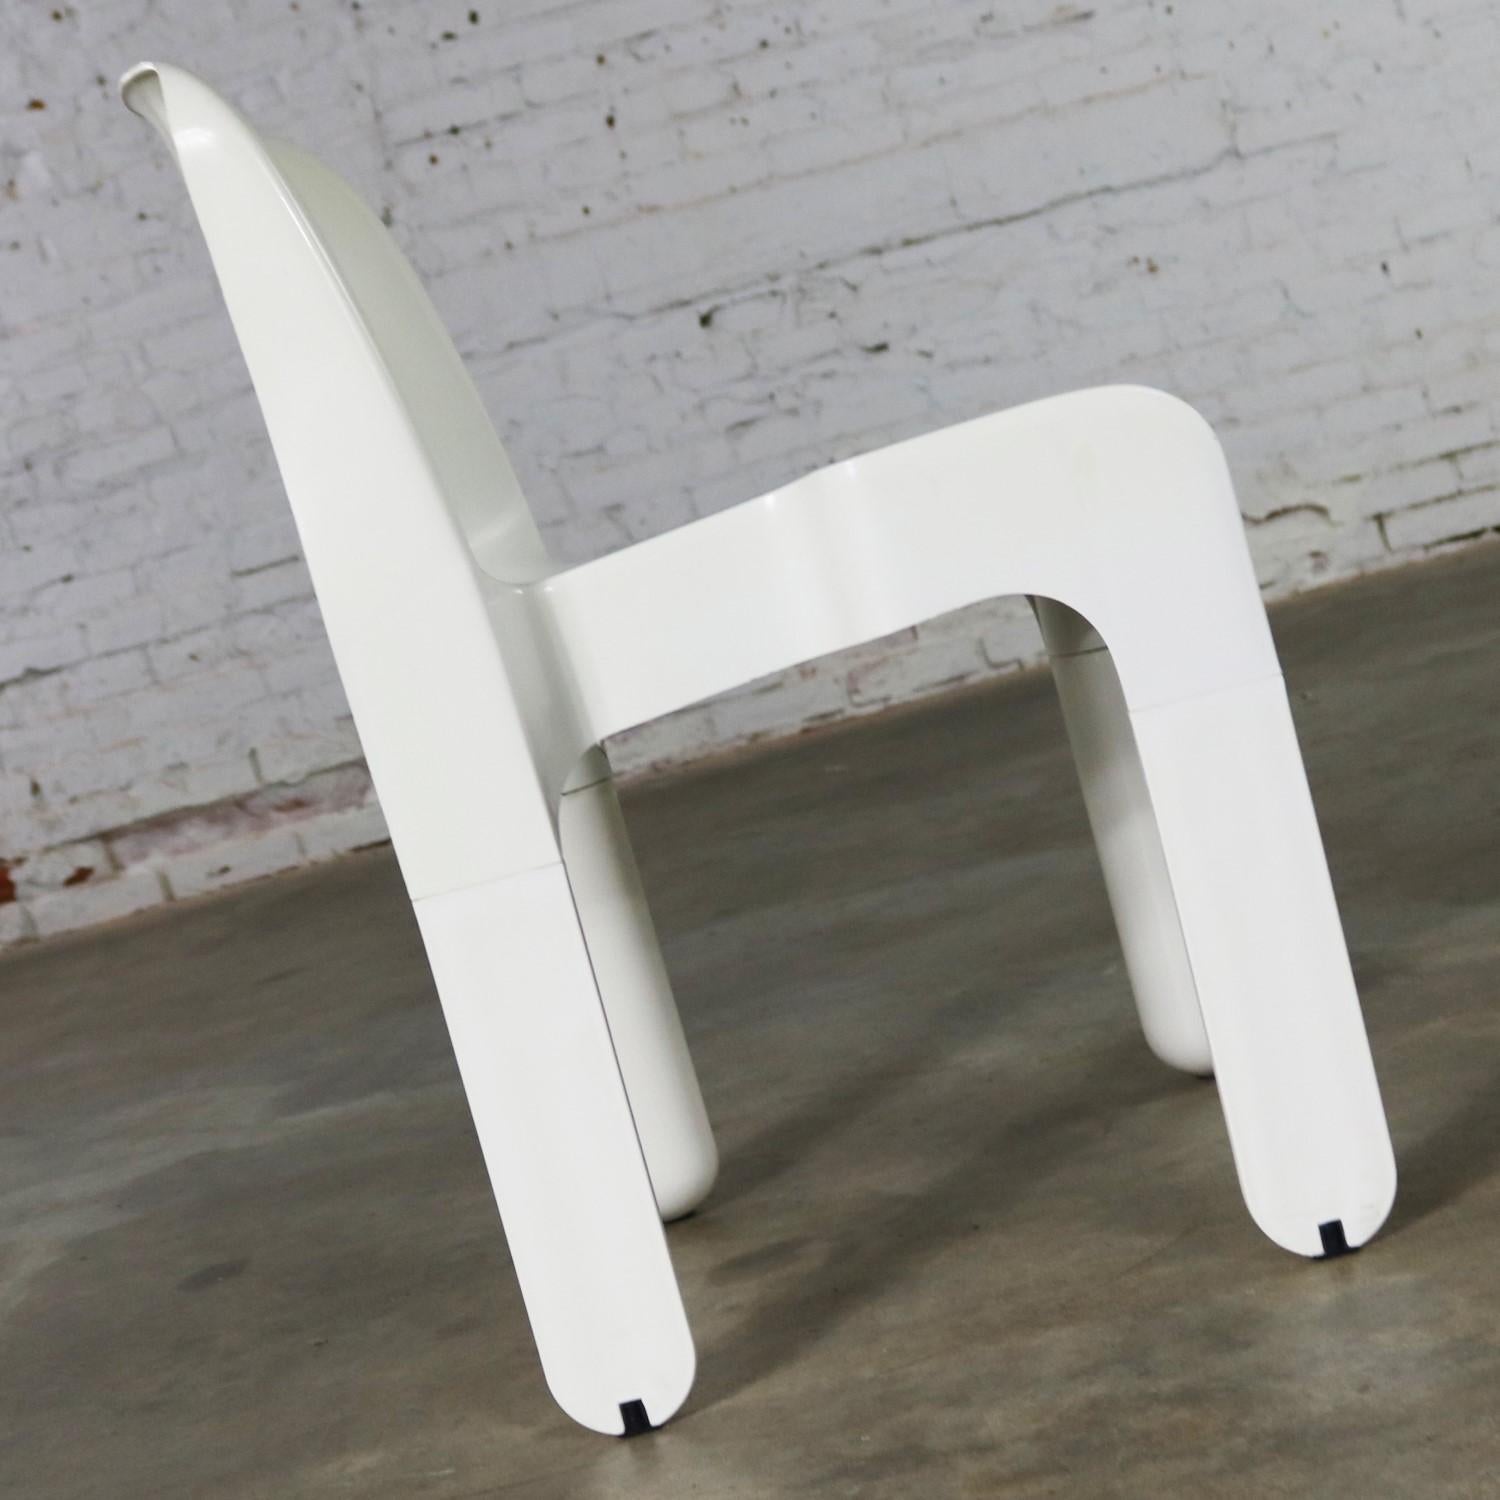 Molded Sedia Universale 4867 Plastic Chair by Joe Columbo for Kartell in White